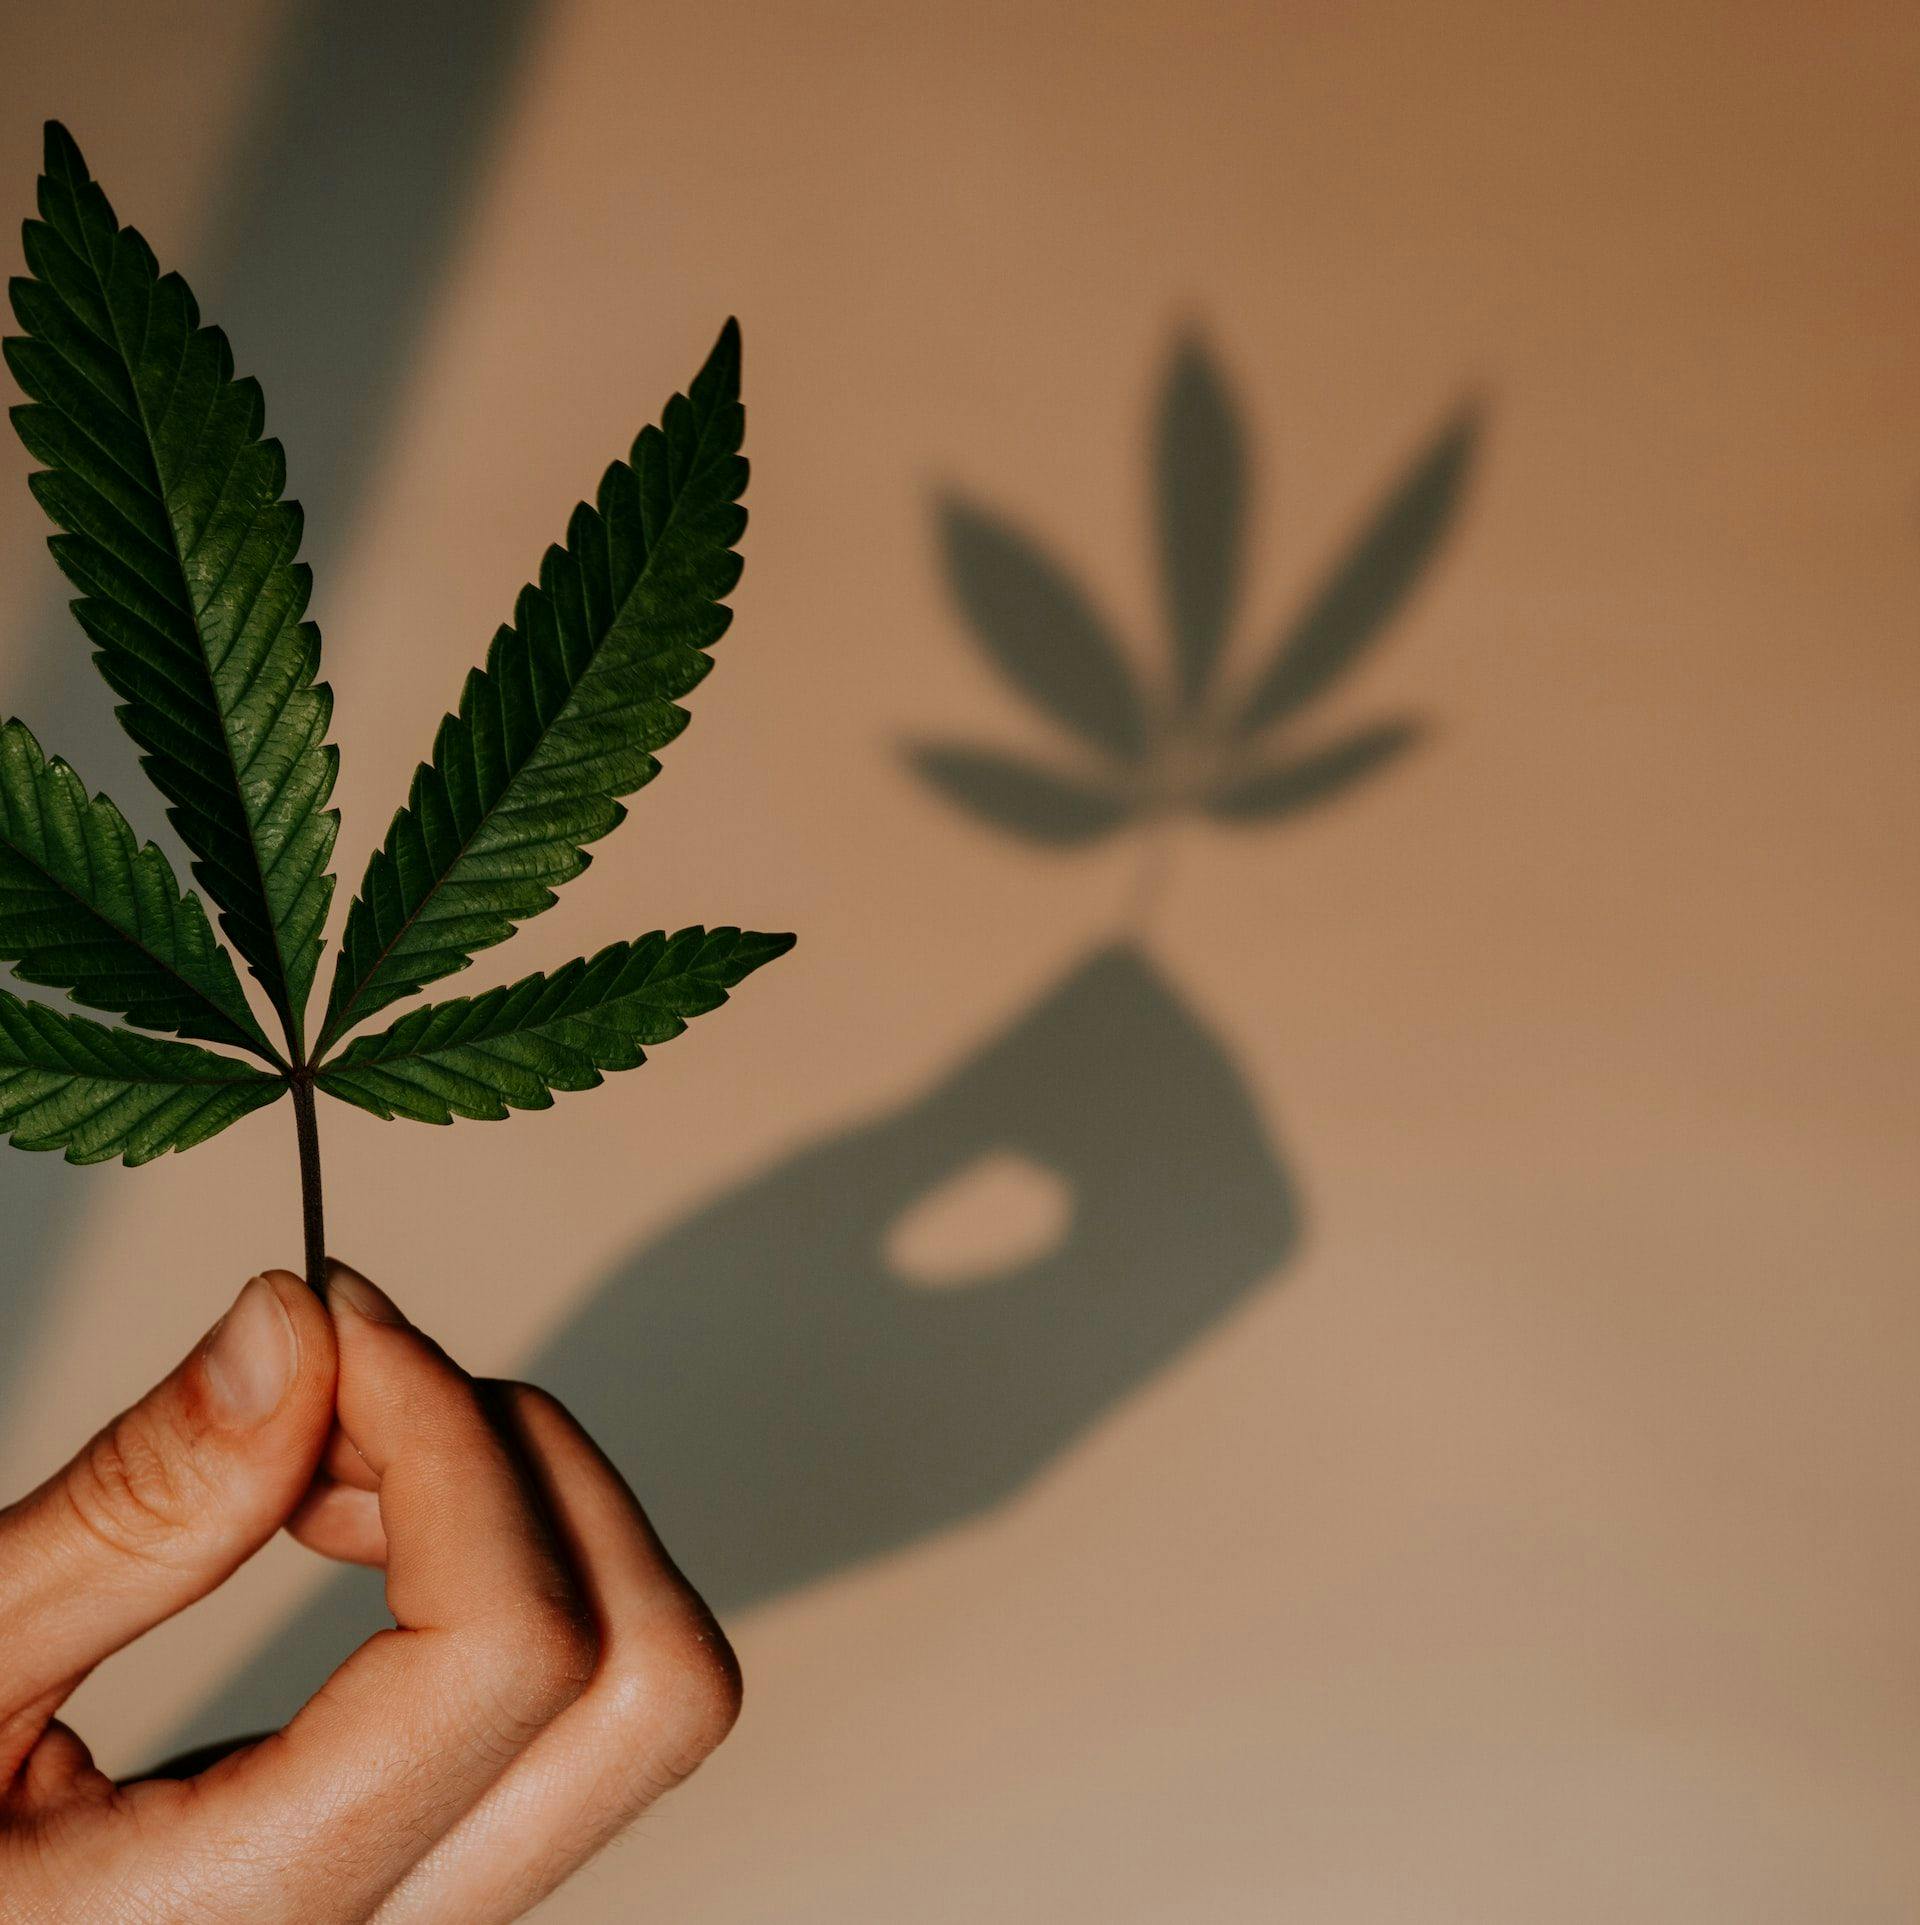 EU calls for streamlining cannabis legalization rules